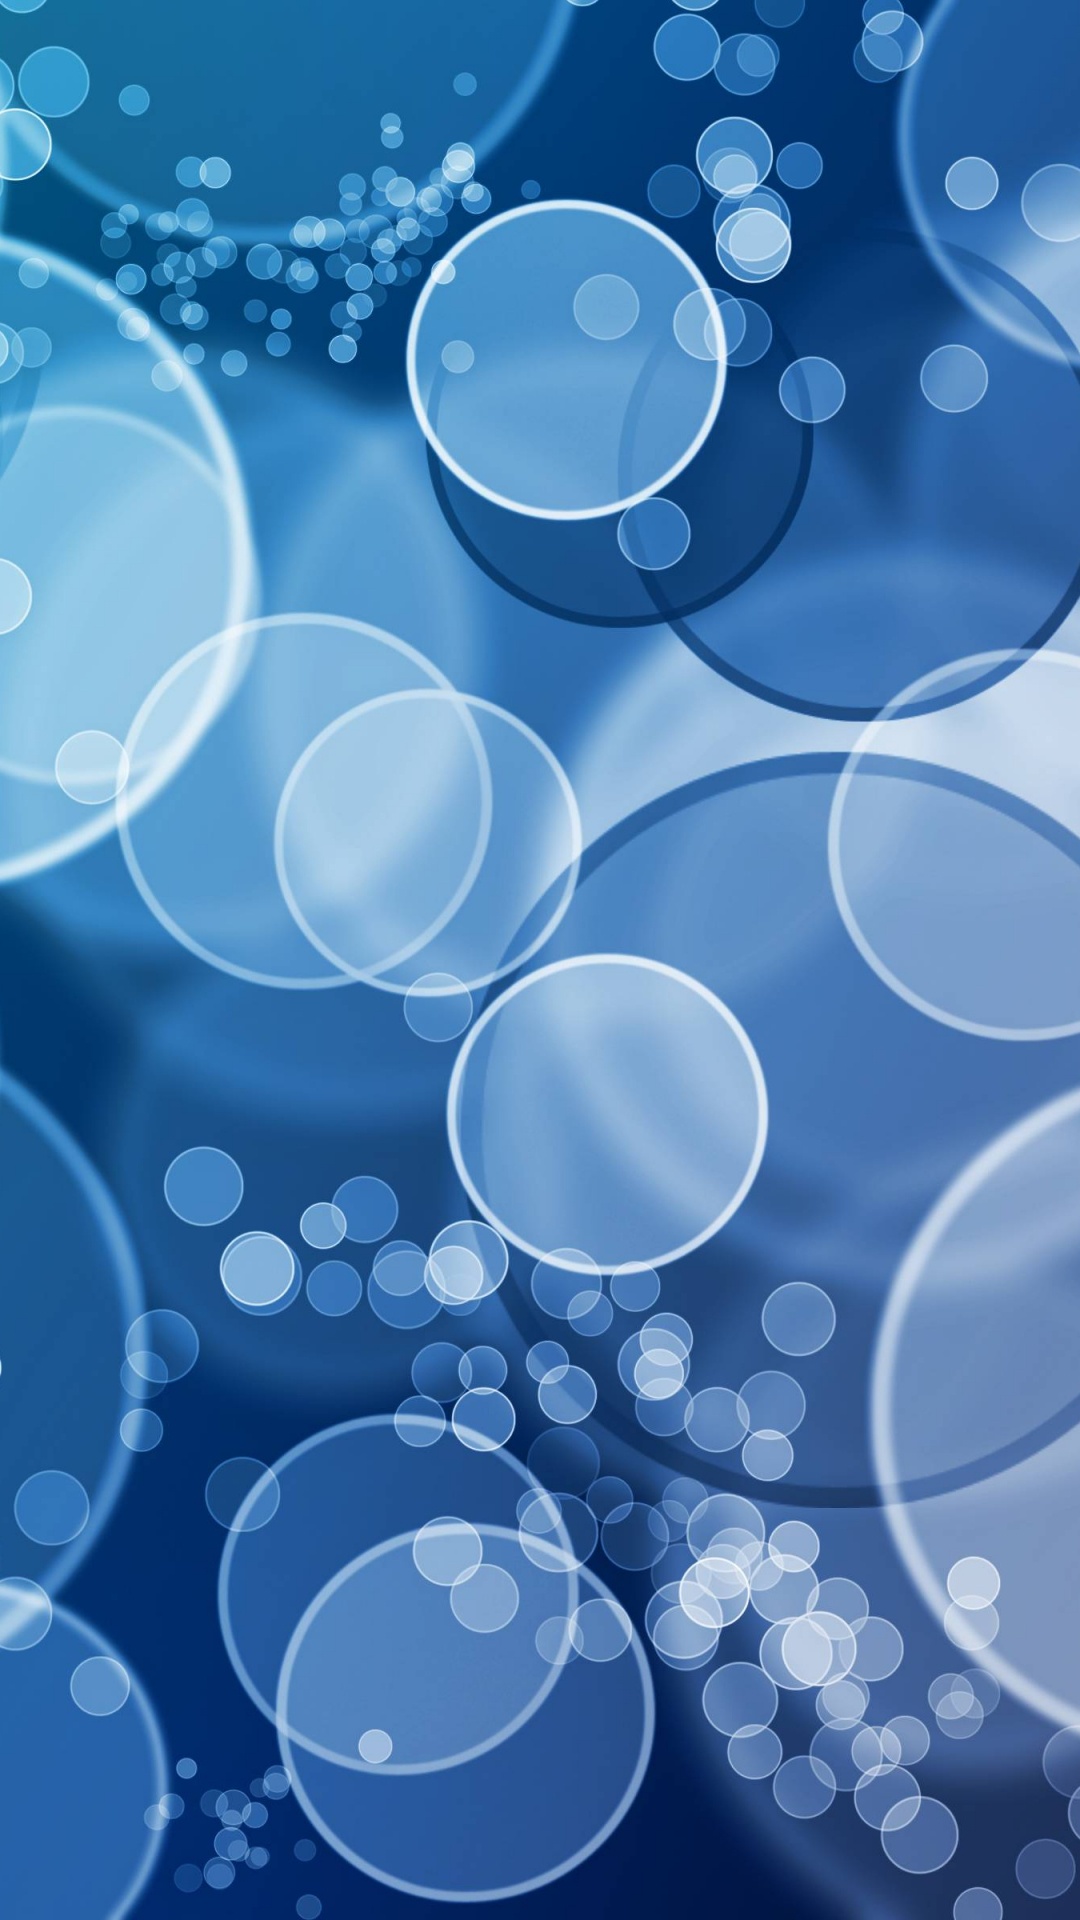 Blue and White Polka Dot Illustration. Wallpaper in 1080x1920 Resolution